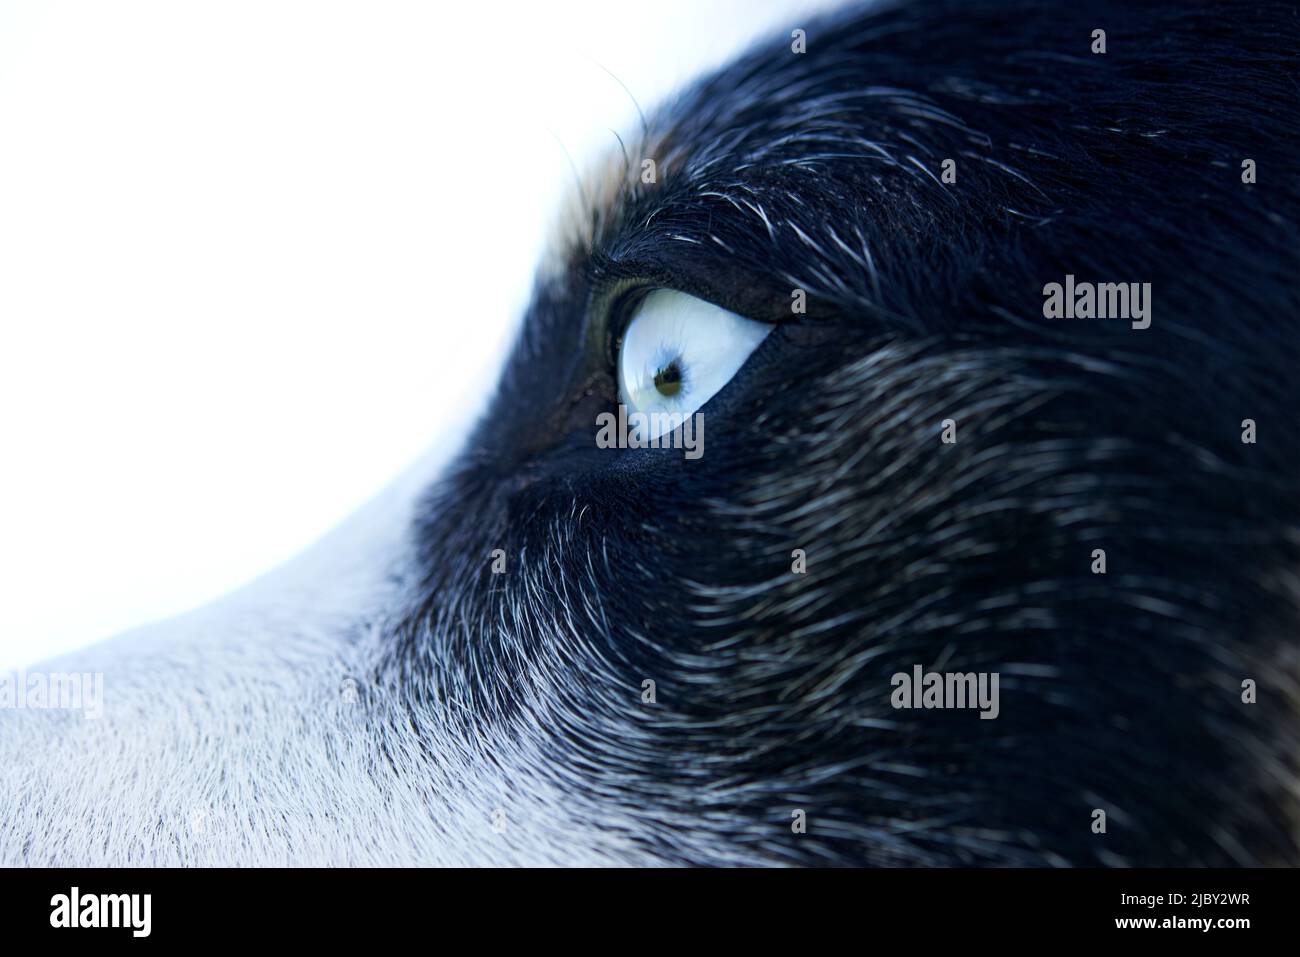 Closeup of blue eye of black and white dog Stock Photo